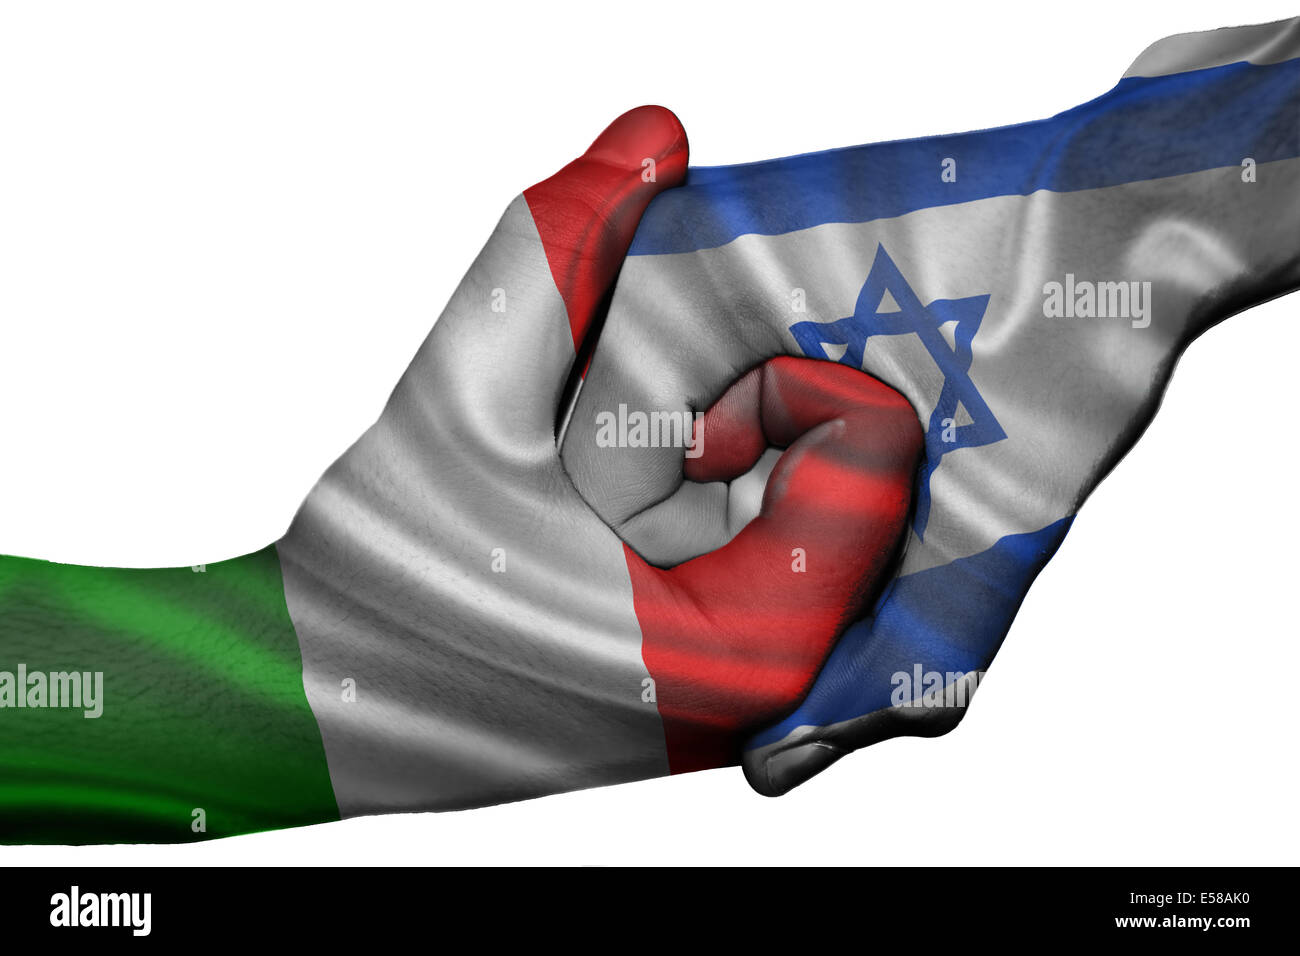 Handshake diplomatiche tra paesi: bandiere di Italia e Israele sovradipinta le due mani Foto Stock